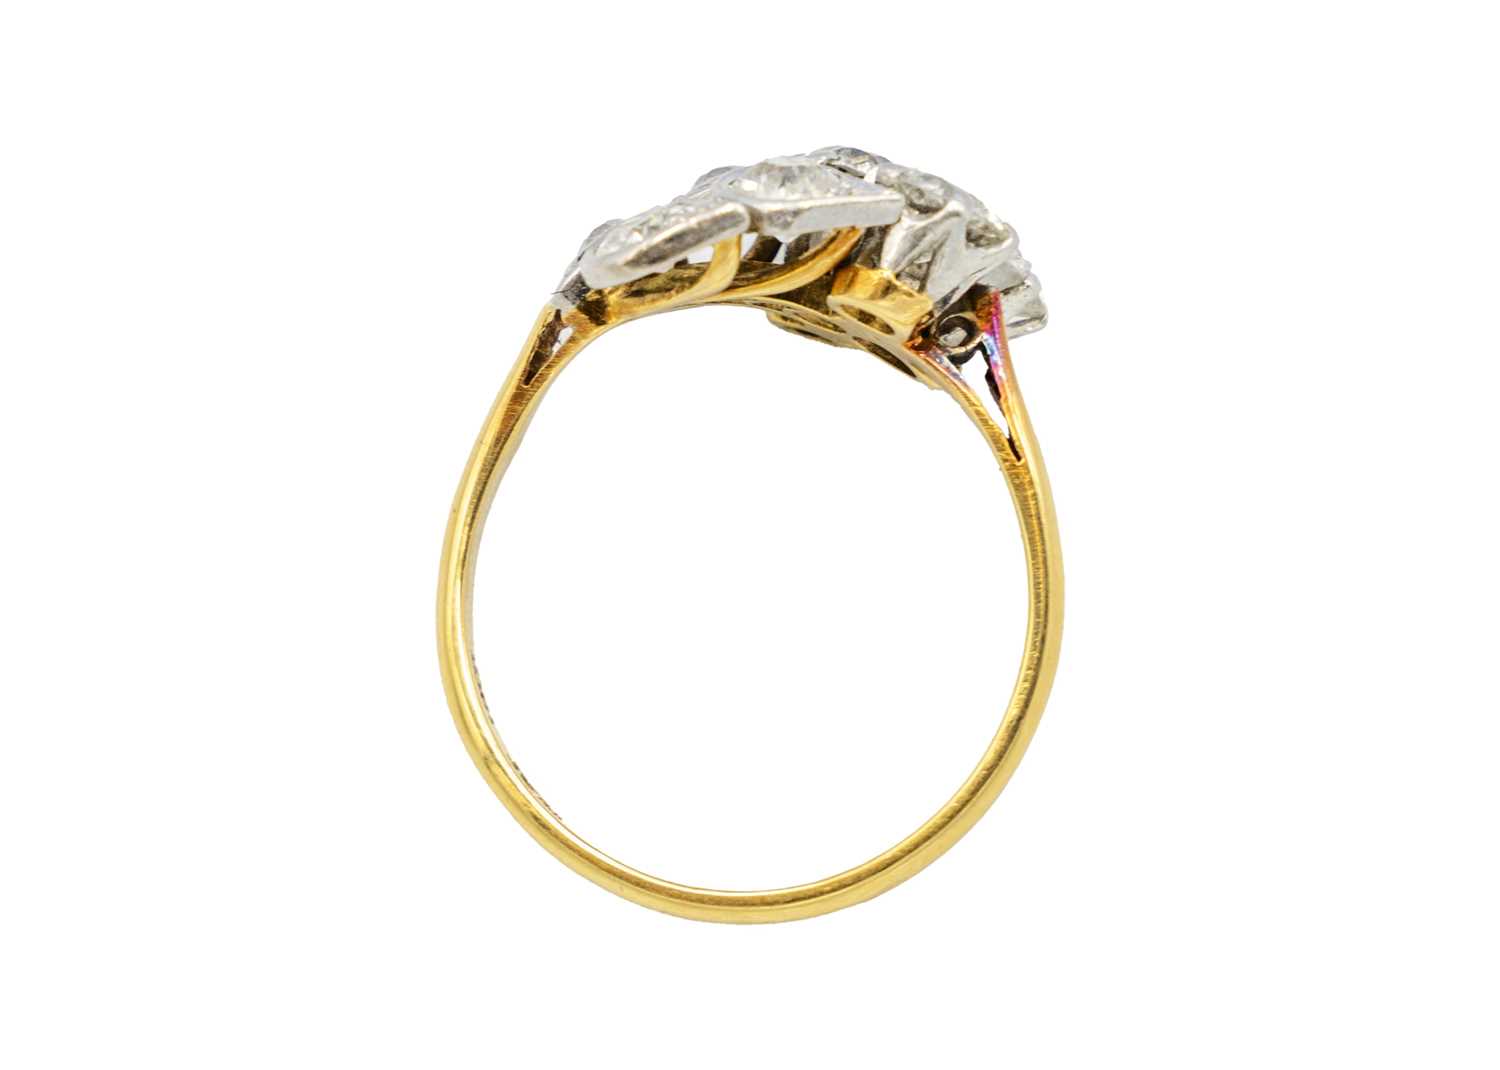 An exquisite Art Deco 18ct gold and platinum diamond set floral design ring. - Image 4 of 7